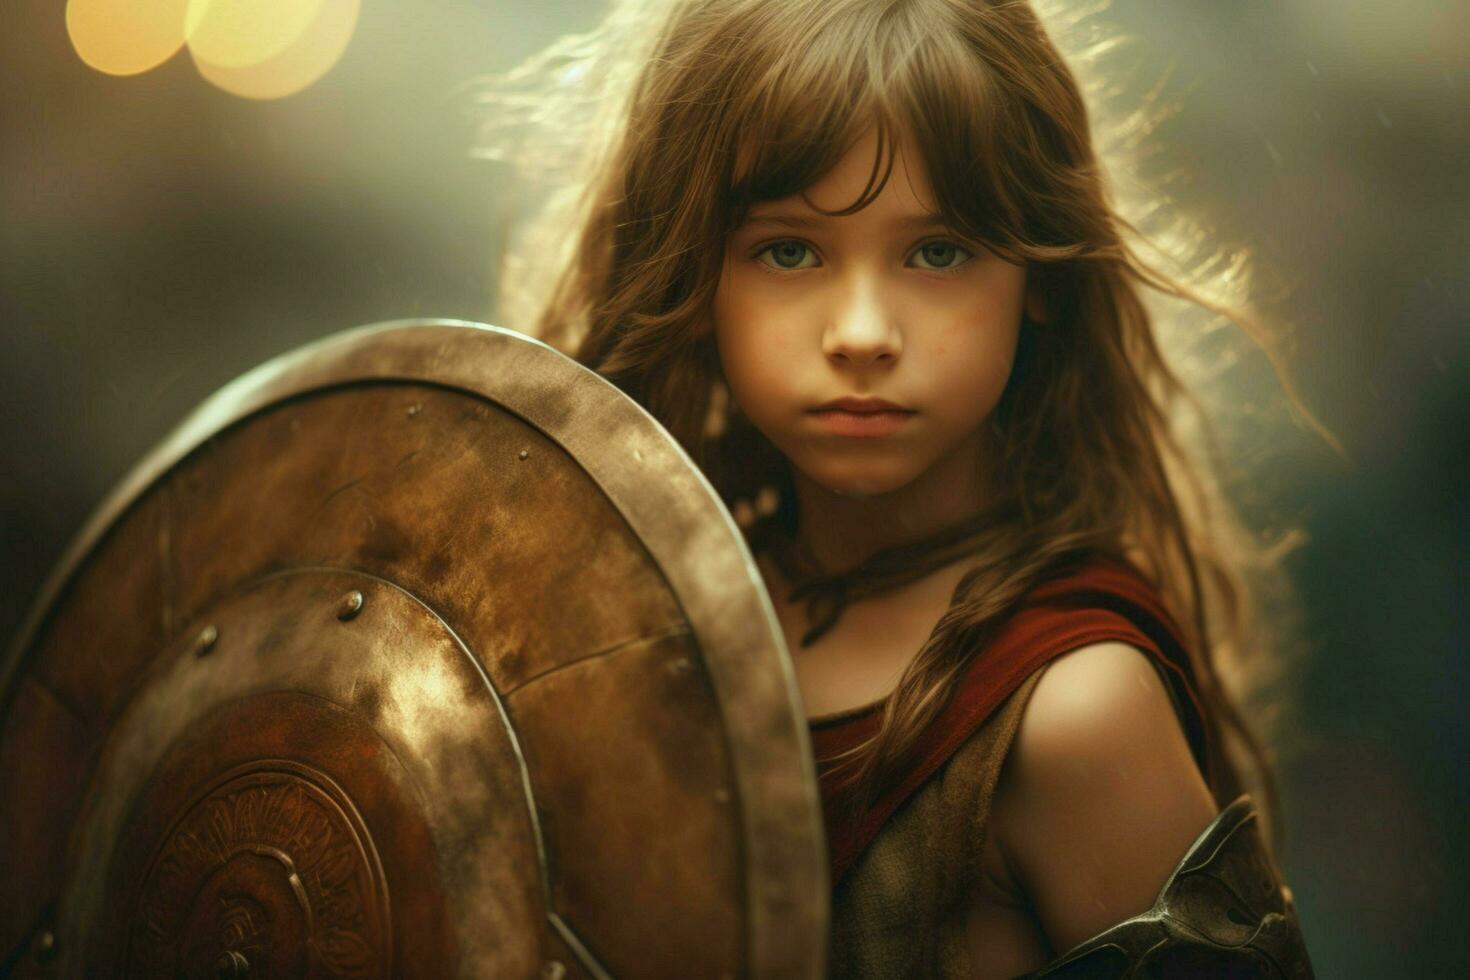 guerrero niño niña proteger juego de azar ficticio mundo foto